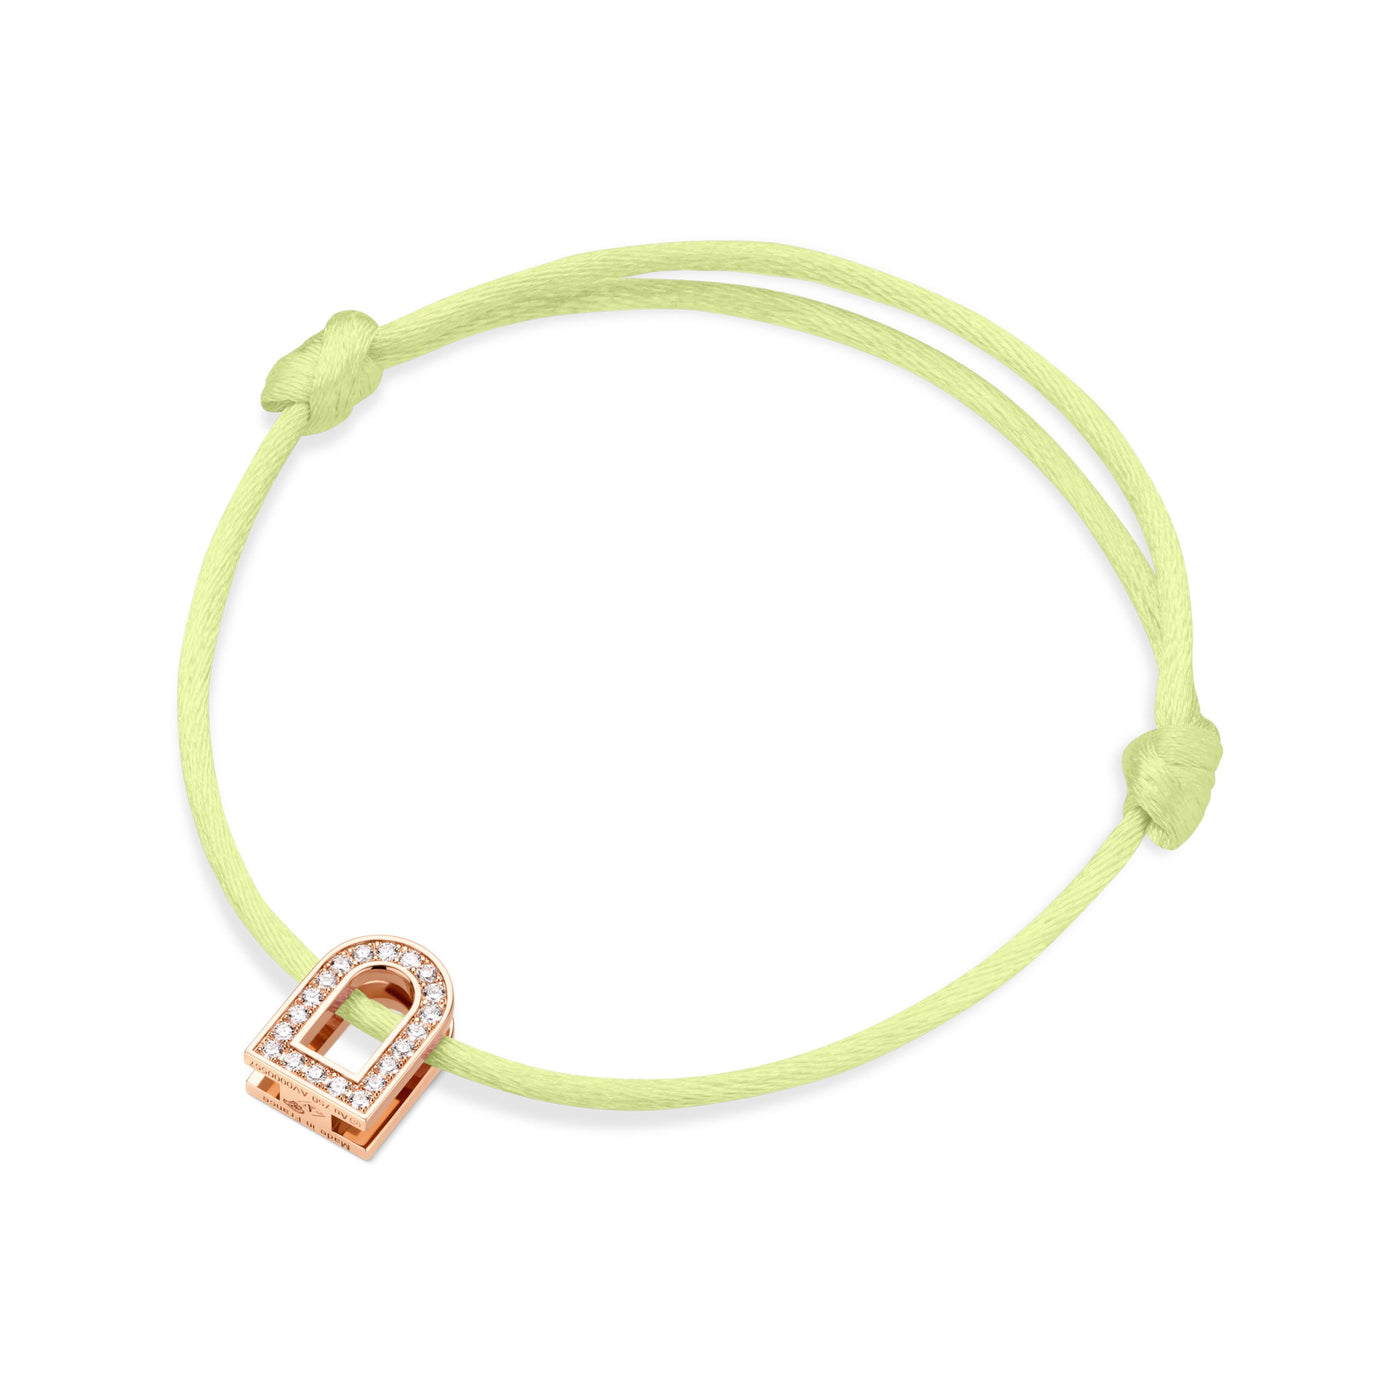 L'Arc Voyage Charm PM Silk Cord Bracelet, 18k Rose Gold with Galerie Diamonds - DAVIDOR